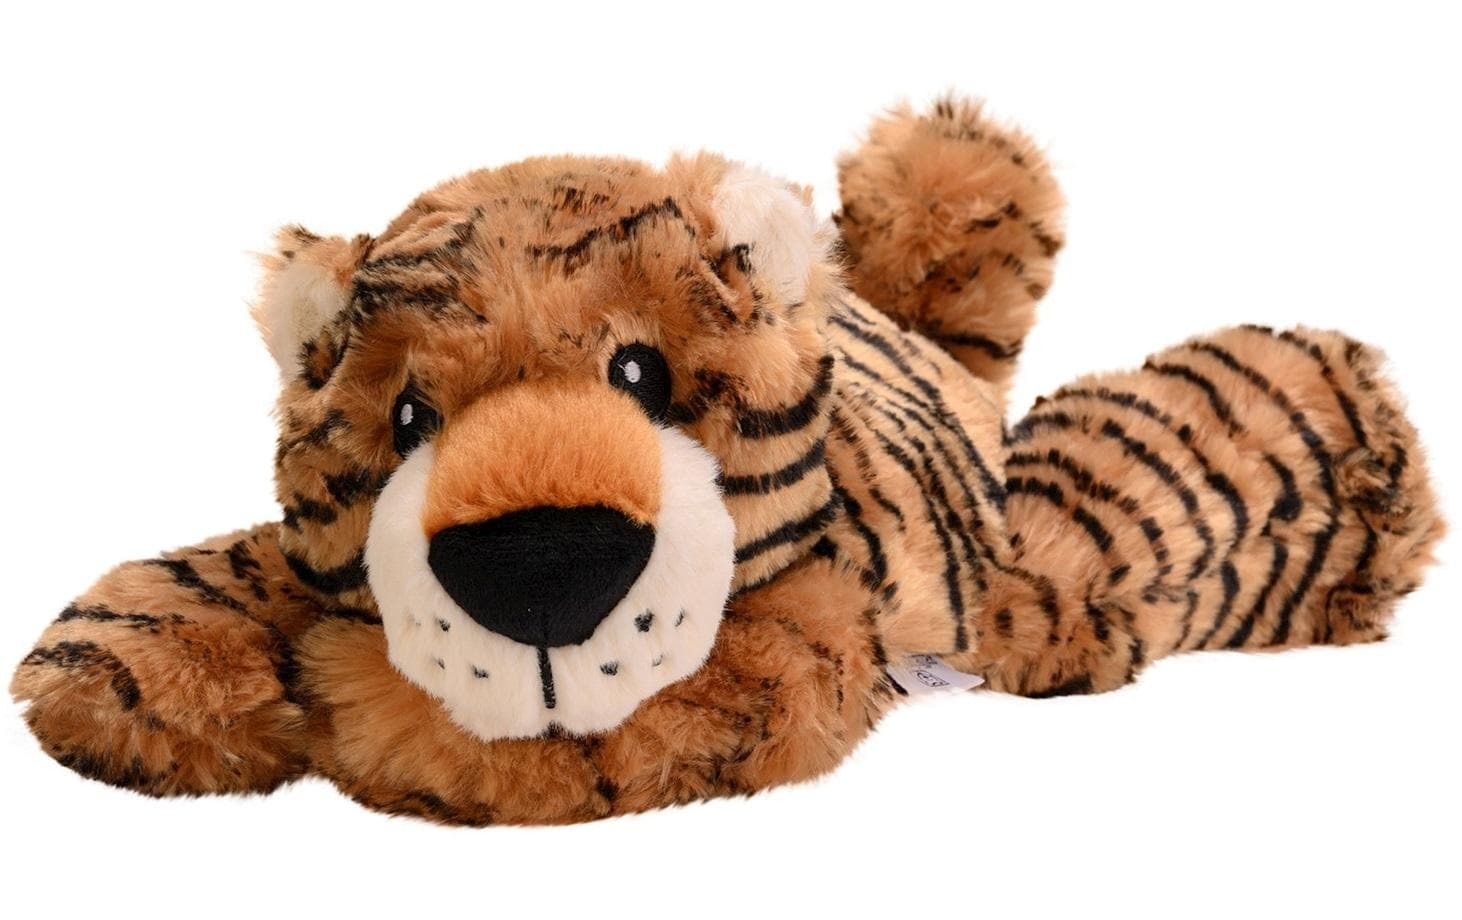 Plüschfigur »Welliebellies Tiger gross 10 cm«